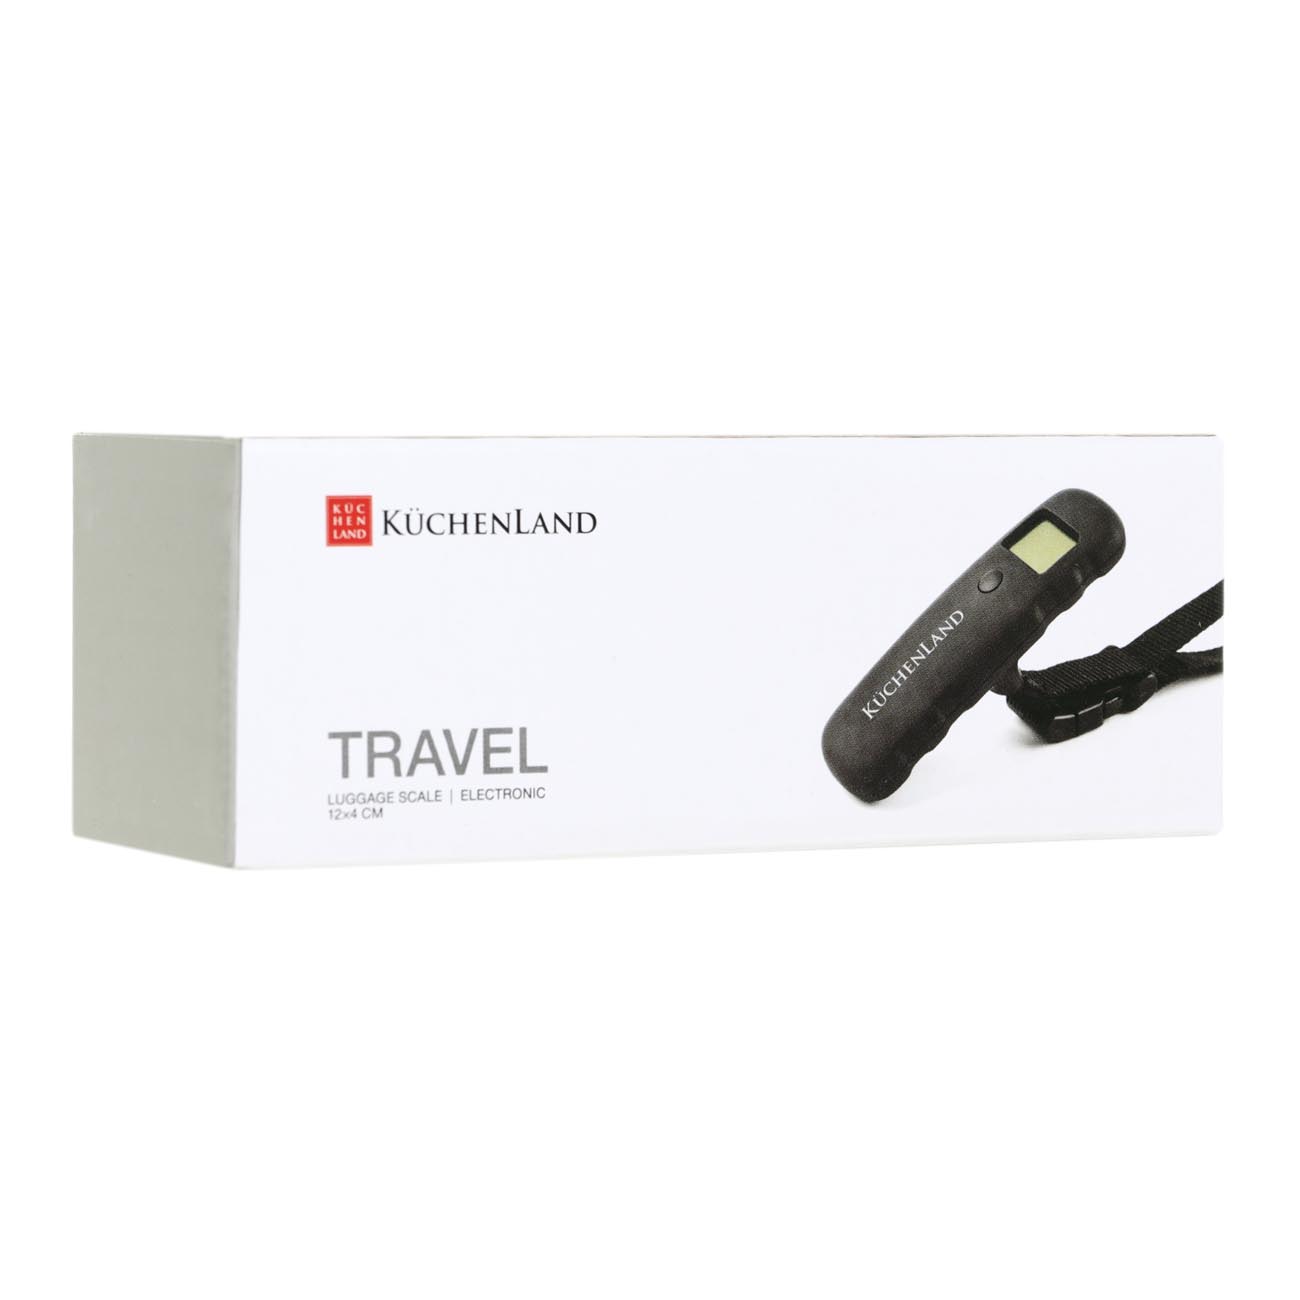 Luggage scale, 12 cm, electronic, plastic, black, Travel изображение № 2